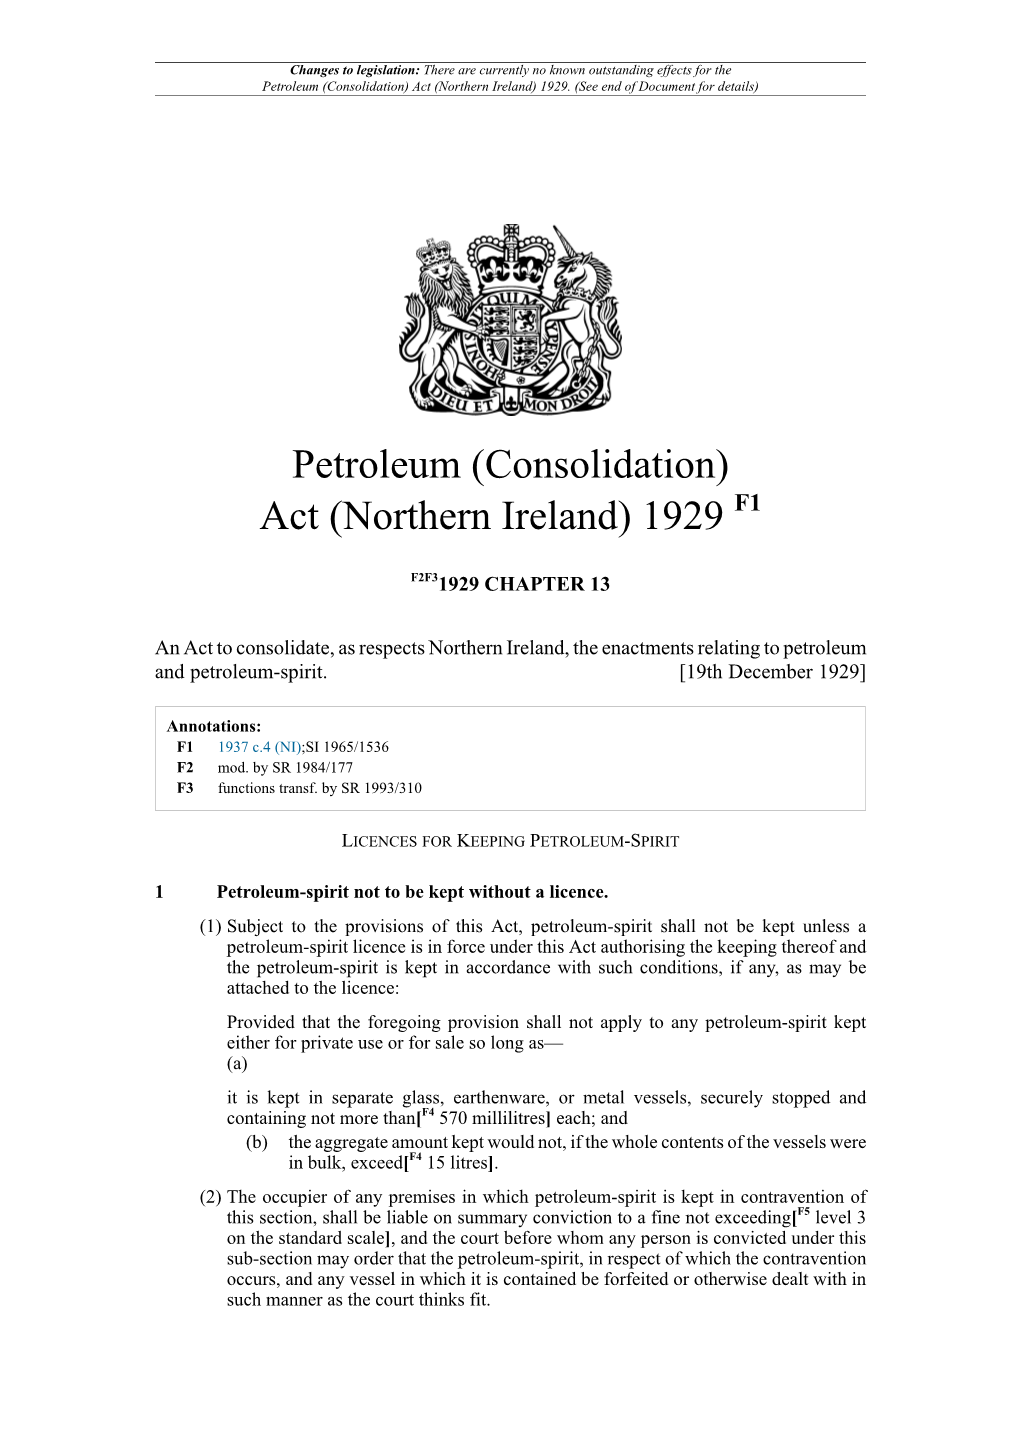 Petroleum (Consolidation) Act (Northern Ireland) 1929